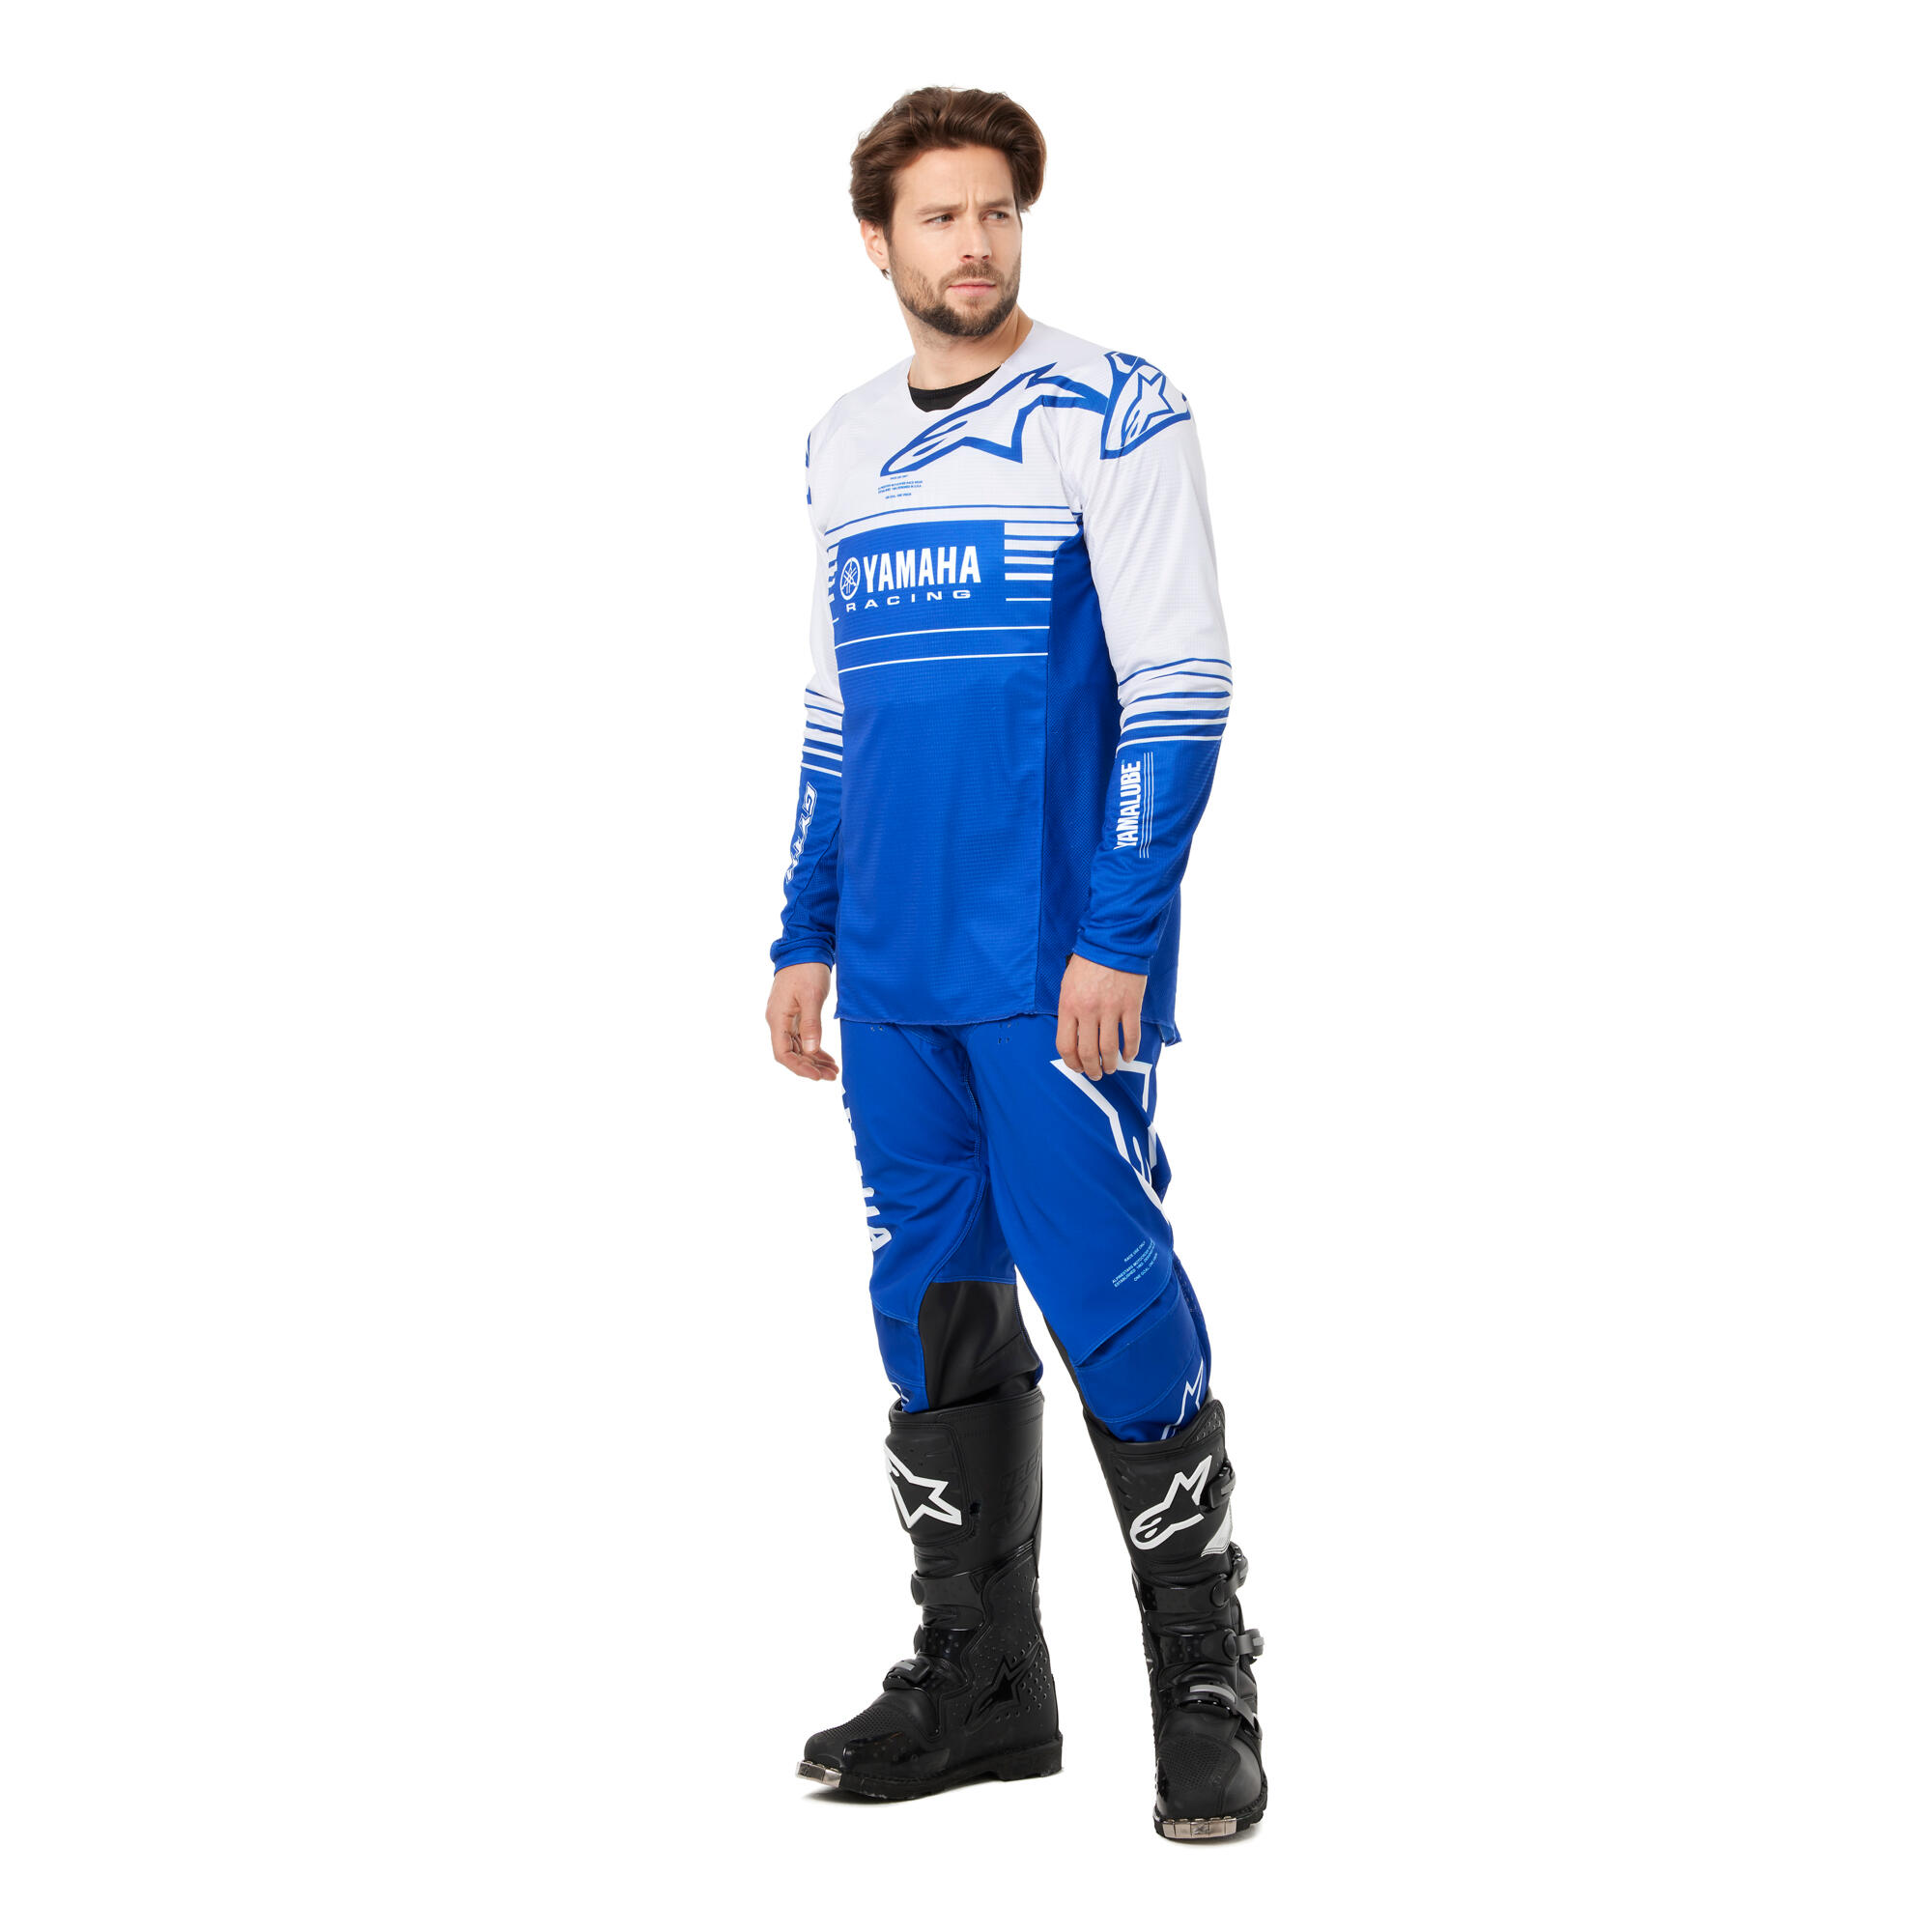 Pantaloni MX Yamaha Alpinestars uomo - Abbigliamento & Merchandise